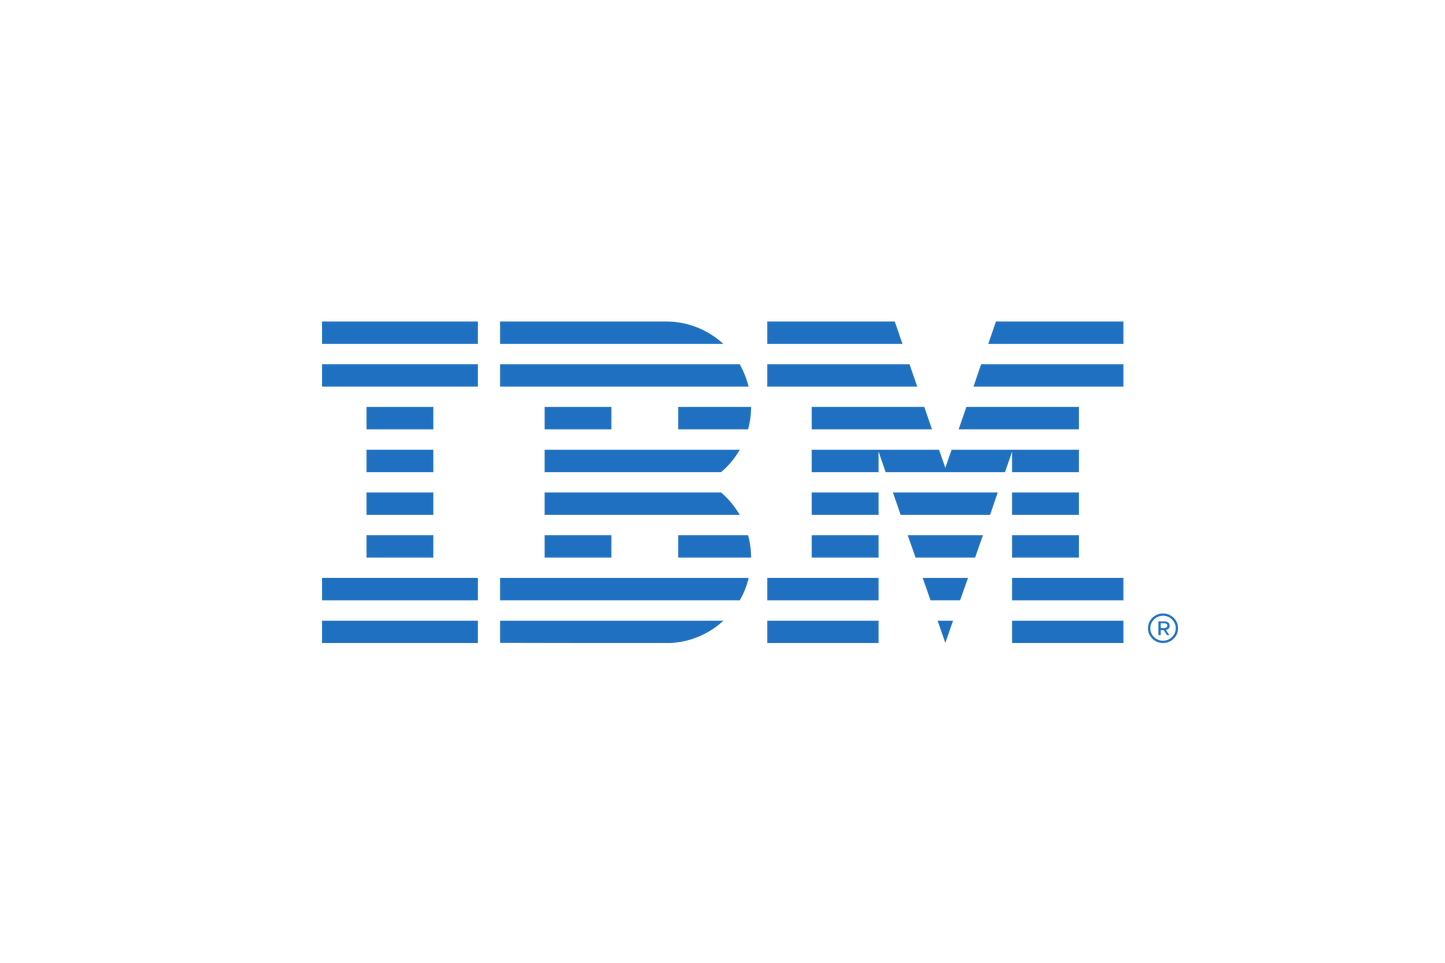 BigID Privacy Portal for IBM Cloud Pak for Data Application per Annum